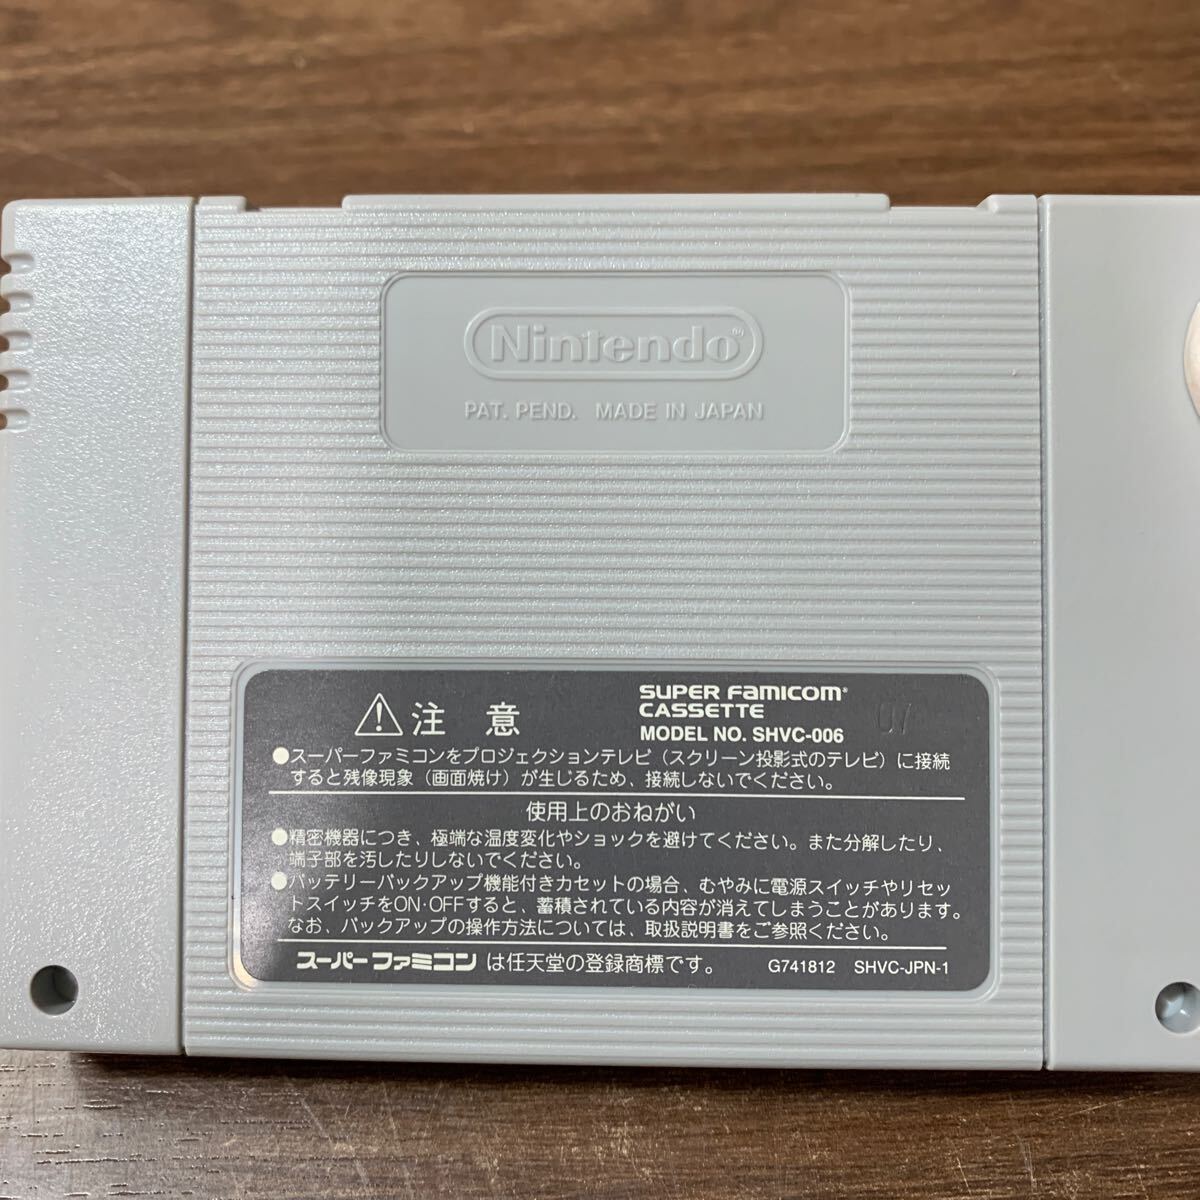 SFC Super Famicom soft Pachi Хара kun SPECIAL3 SHVC-P-AP3J retro игра развлечение хобби специальный ( камень 990